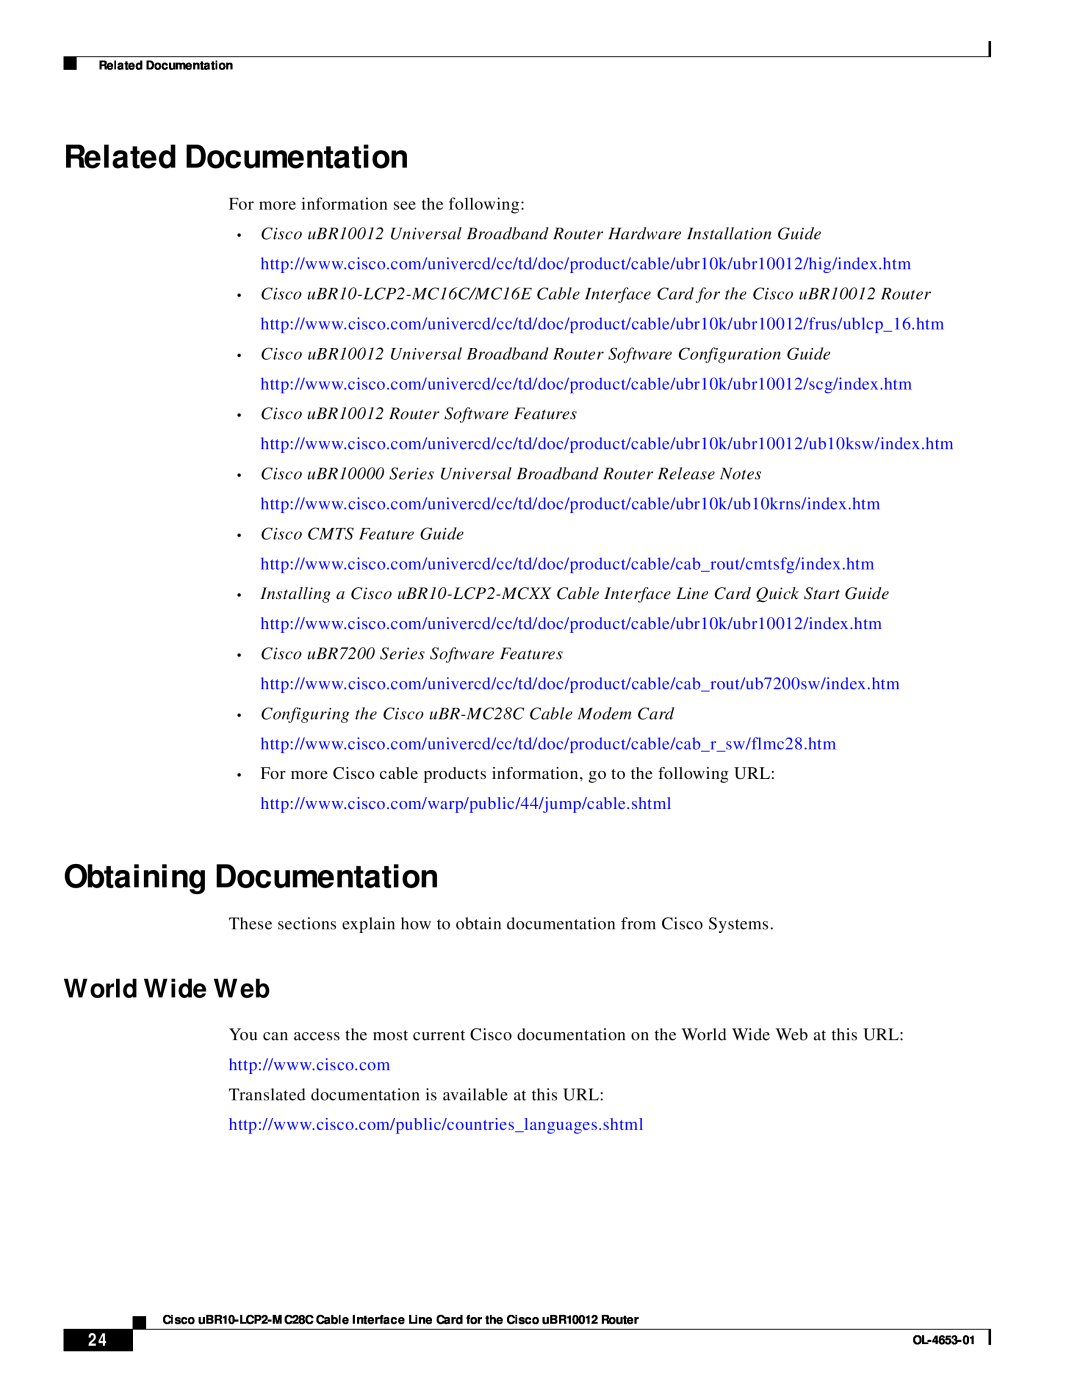 Cisco Systems uBR10-LCP2-MC28C manual Related Documentation, Obtaining Documentation, World Wide Web 